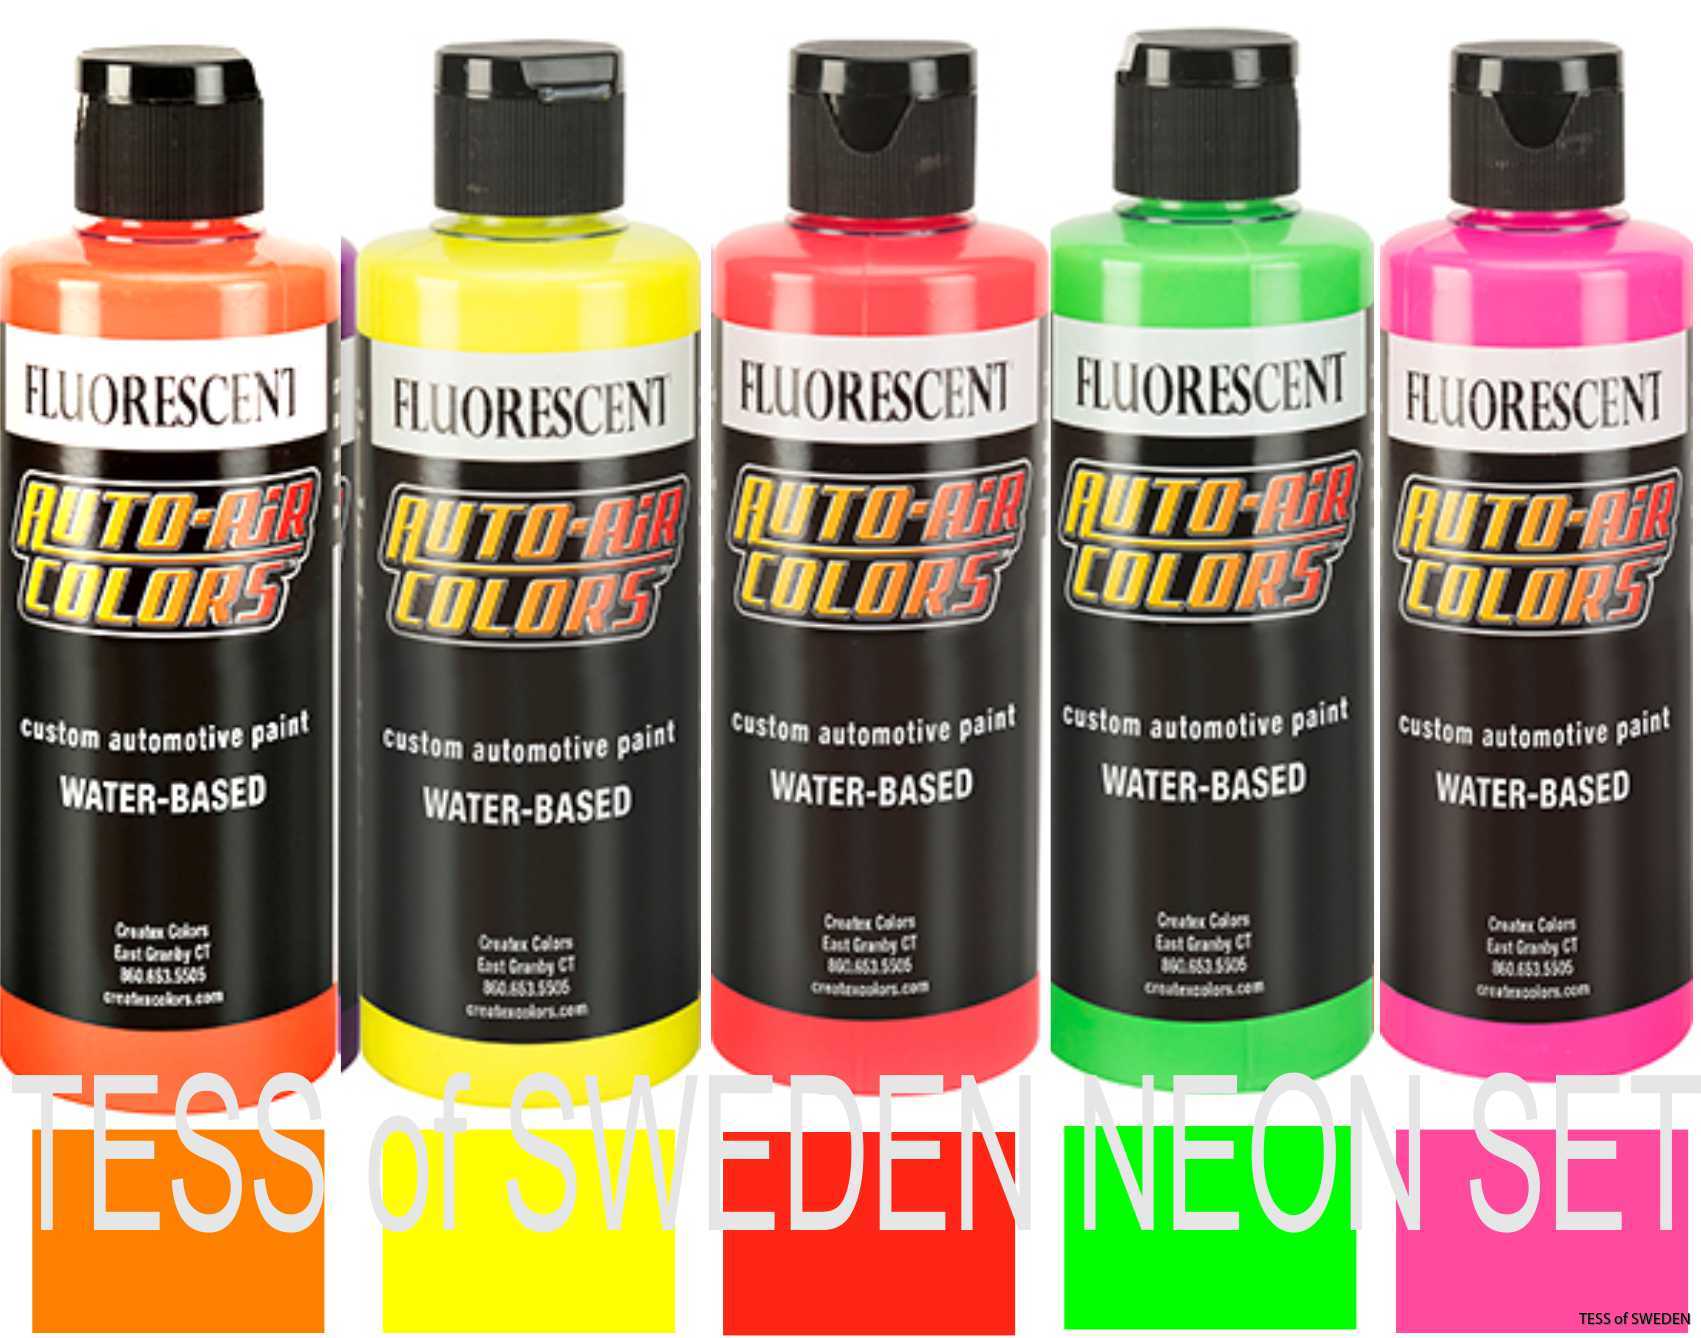 Createx Airbrush Colors - 5407 Hot Pink - Airbrush Paint Direct